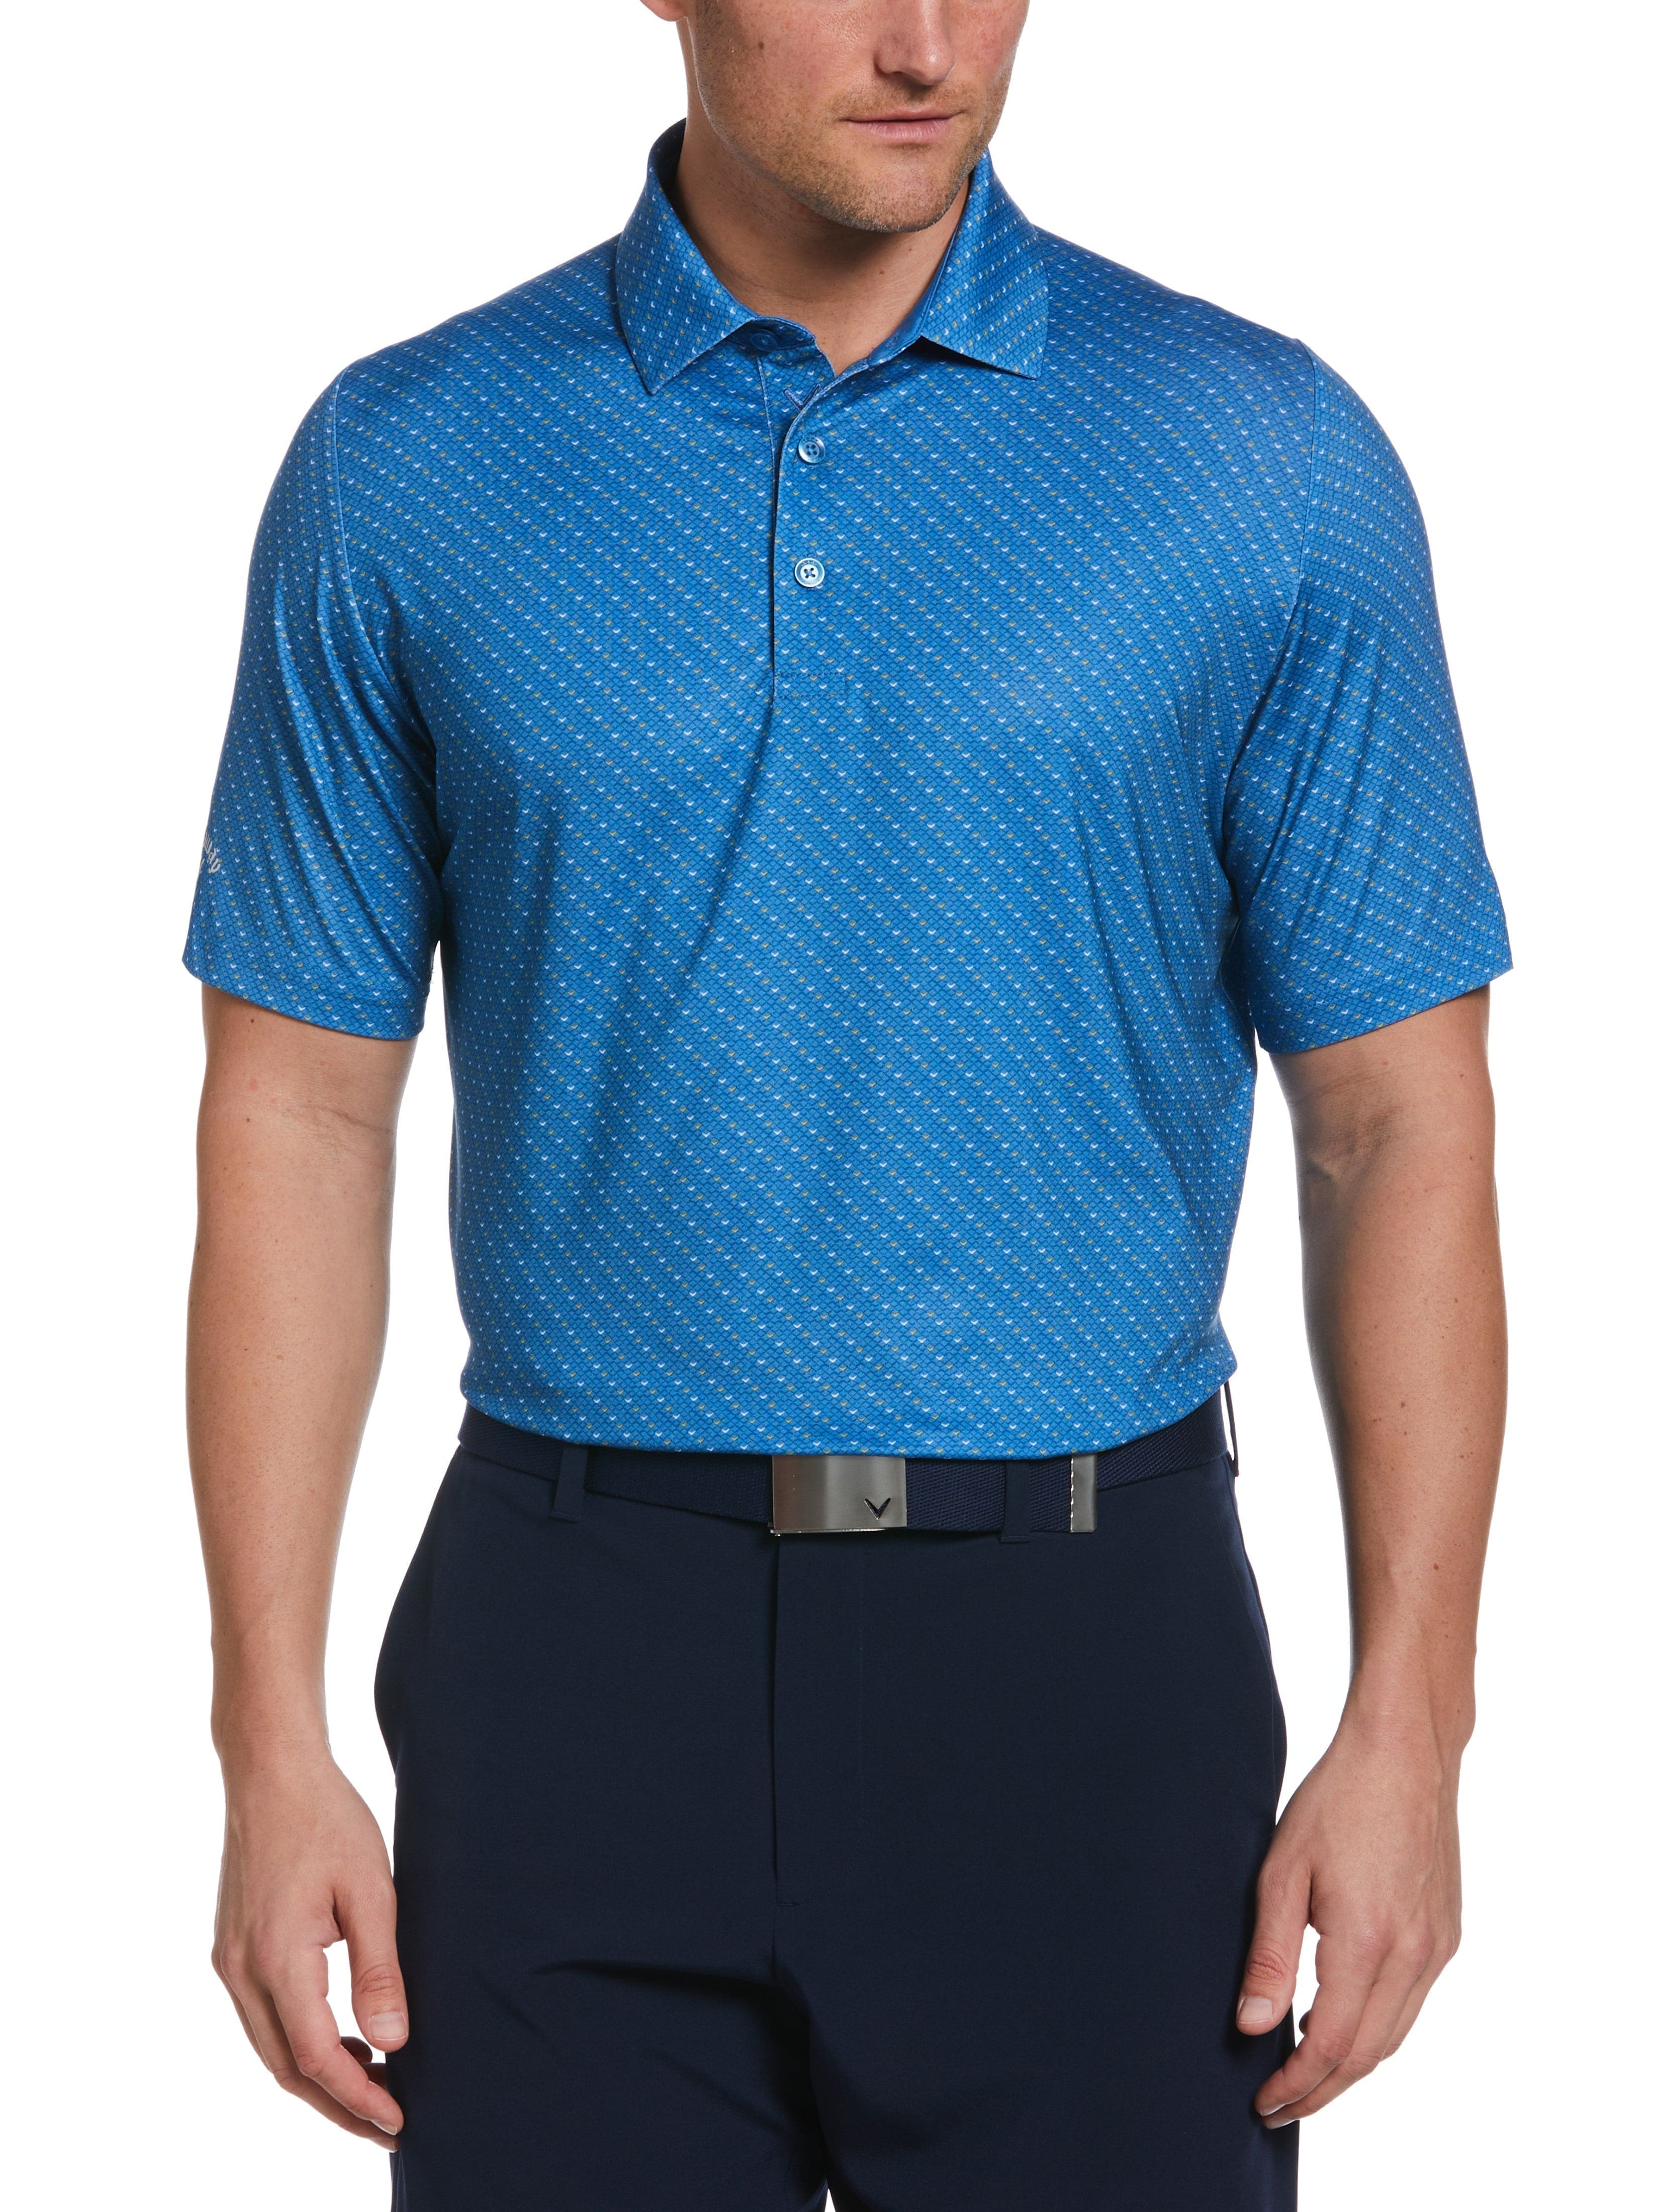 Callaway Apparel Mens Swing Tech Allover Chevron Golf Polo Shirt, Size Large, Vallarta Blue, Polyester/Elastane | Golf Apparel Shop